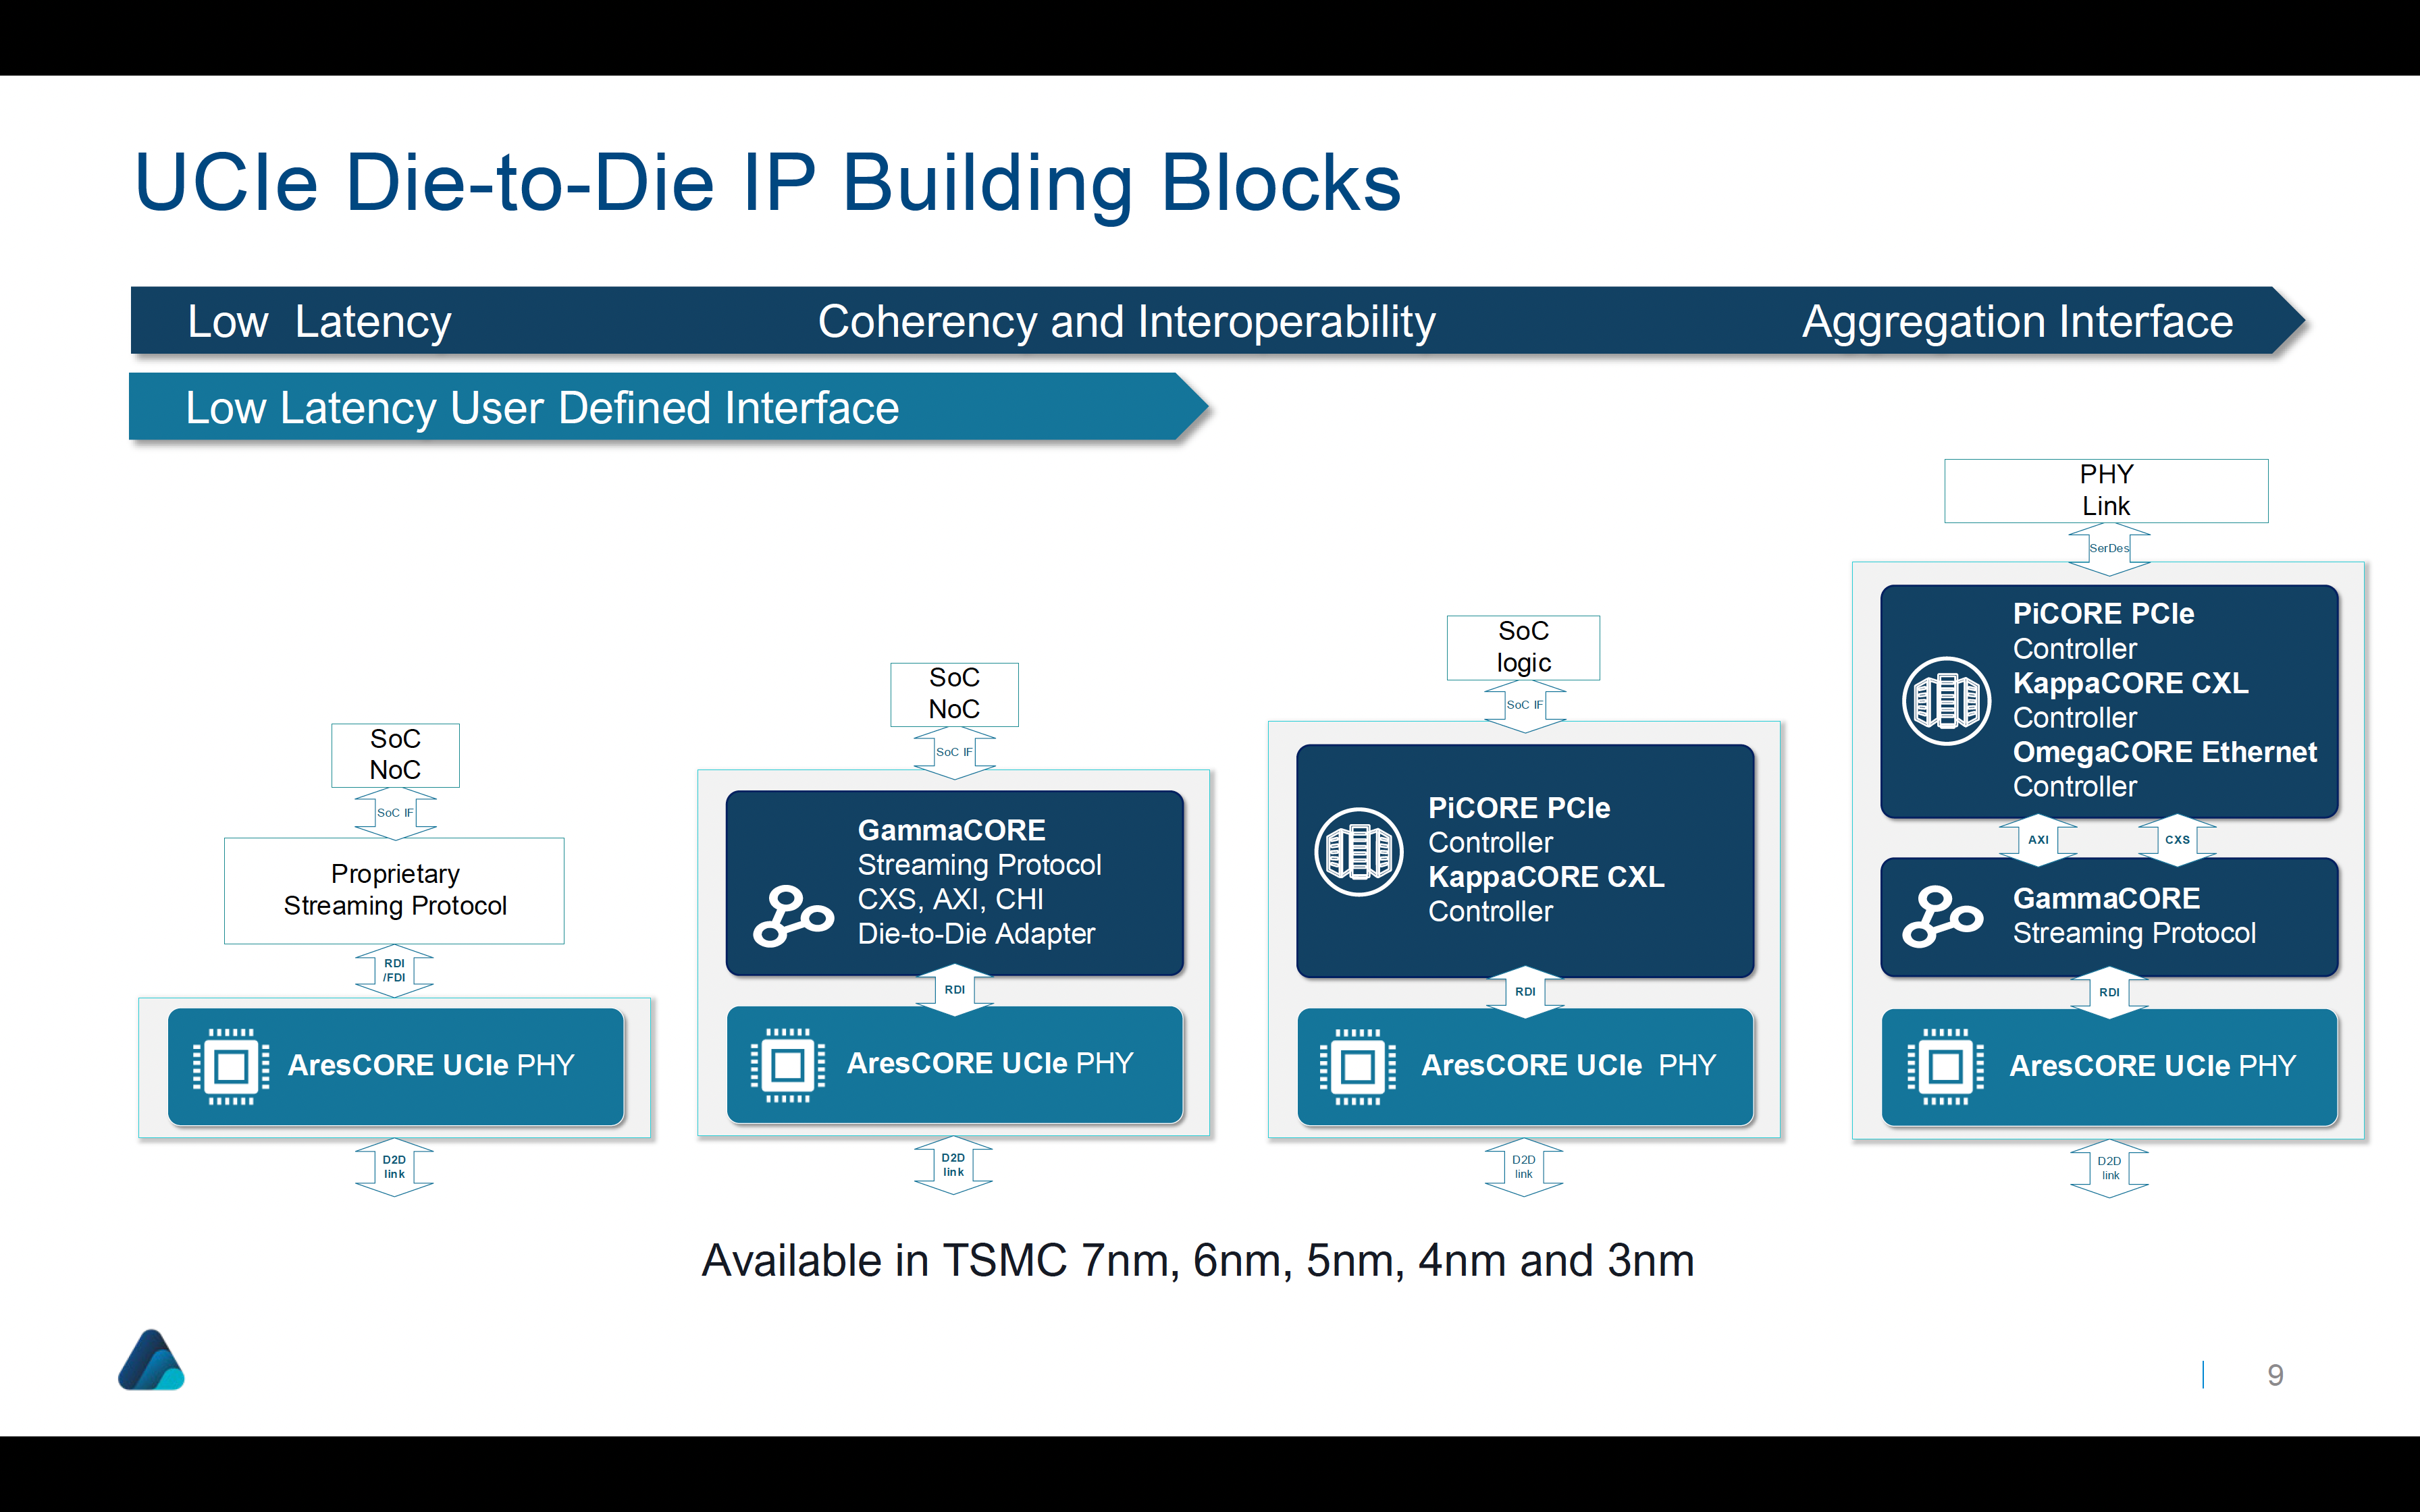 UCIe D2D IP Building Blocks